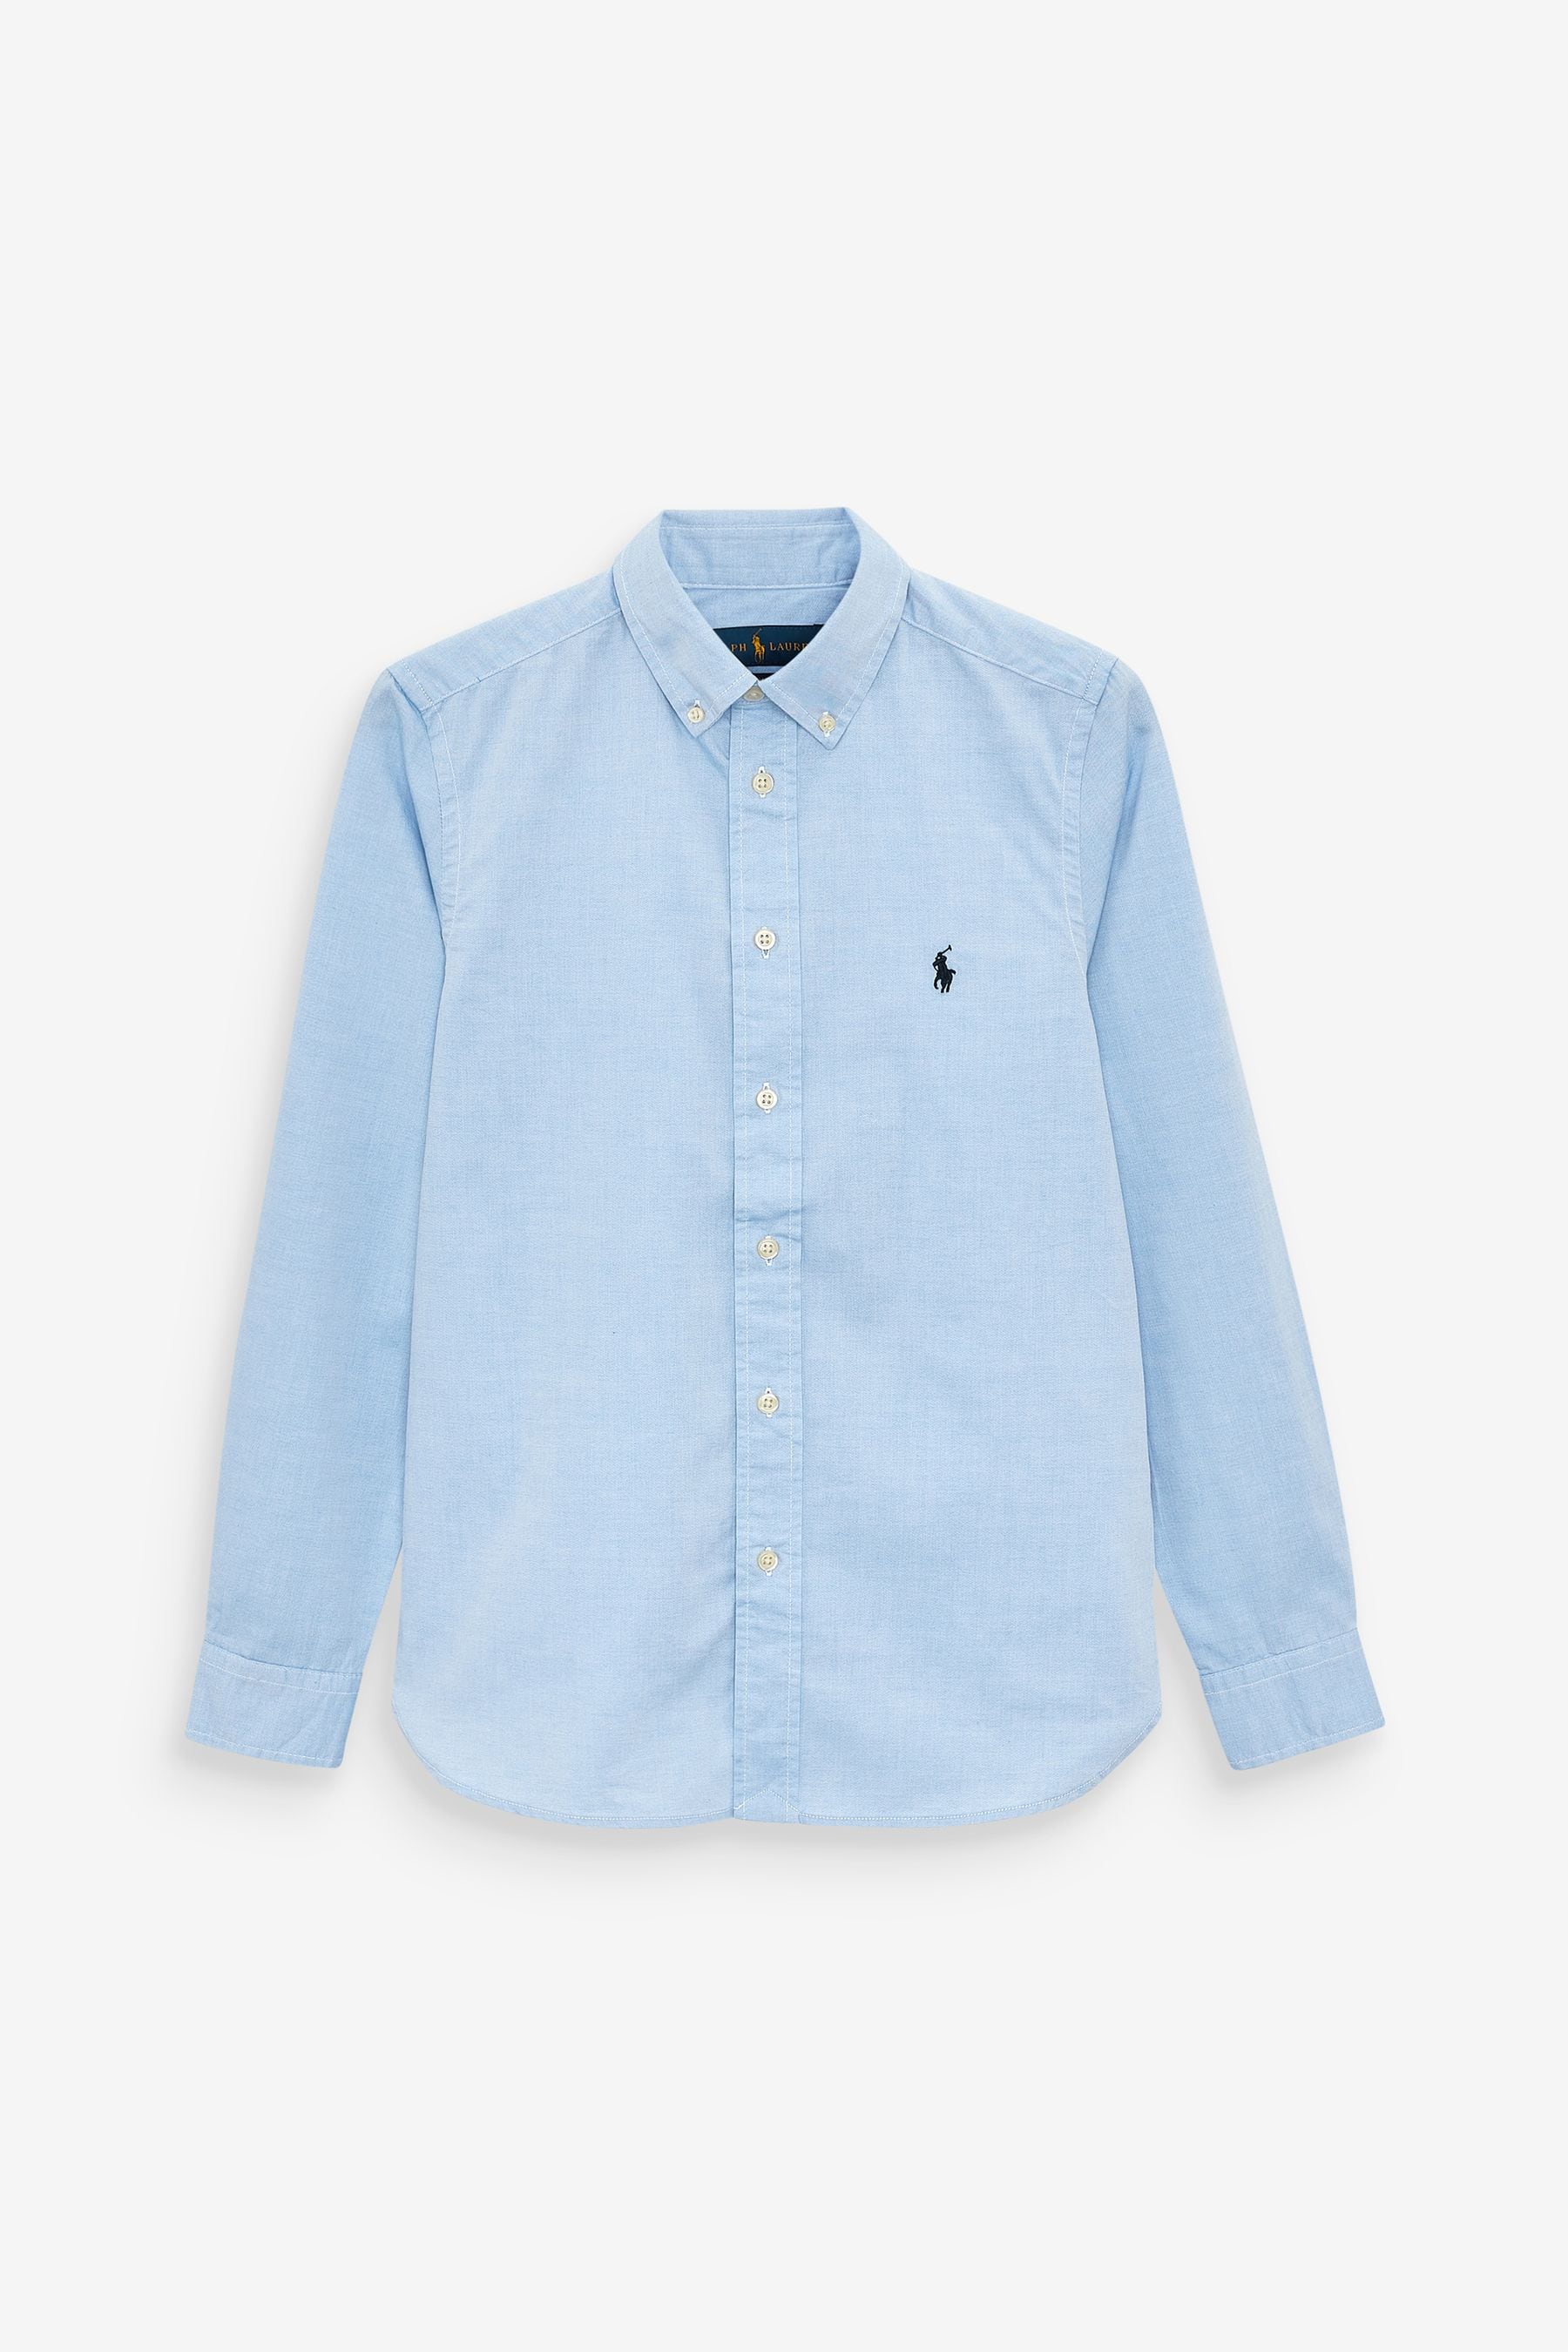 Buy Polo Ralph Lauren Boys Oxford Logo Shirt from the Next UK online shop